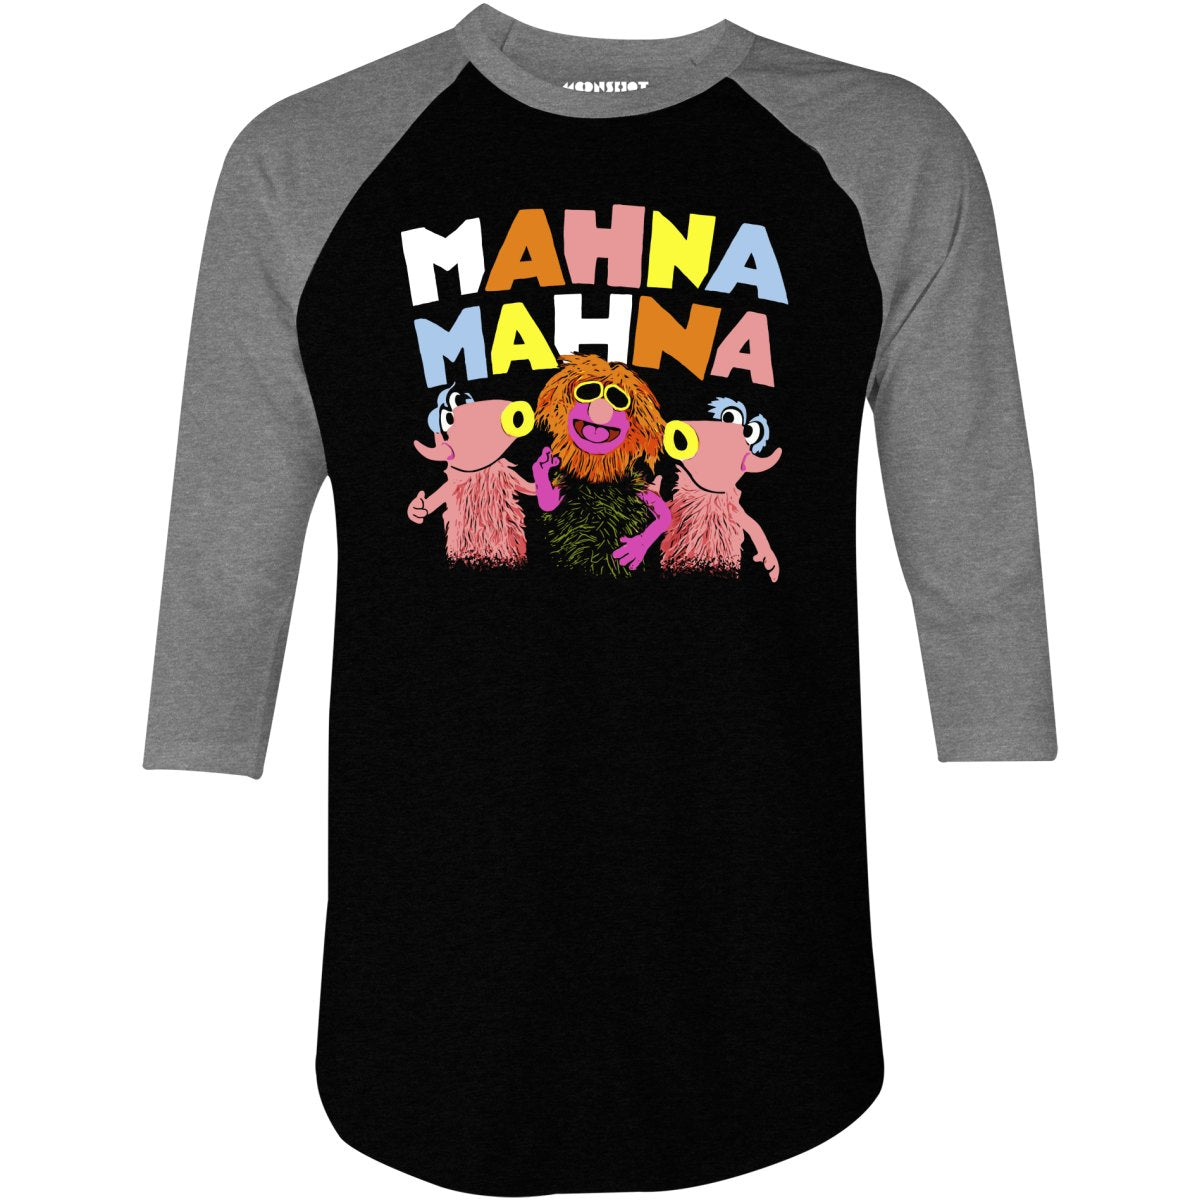 Mahna Mahna - 3/4 Sleeve Raglan T-Shirt